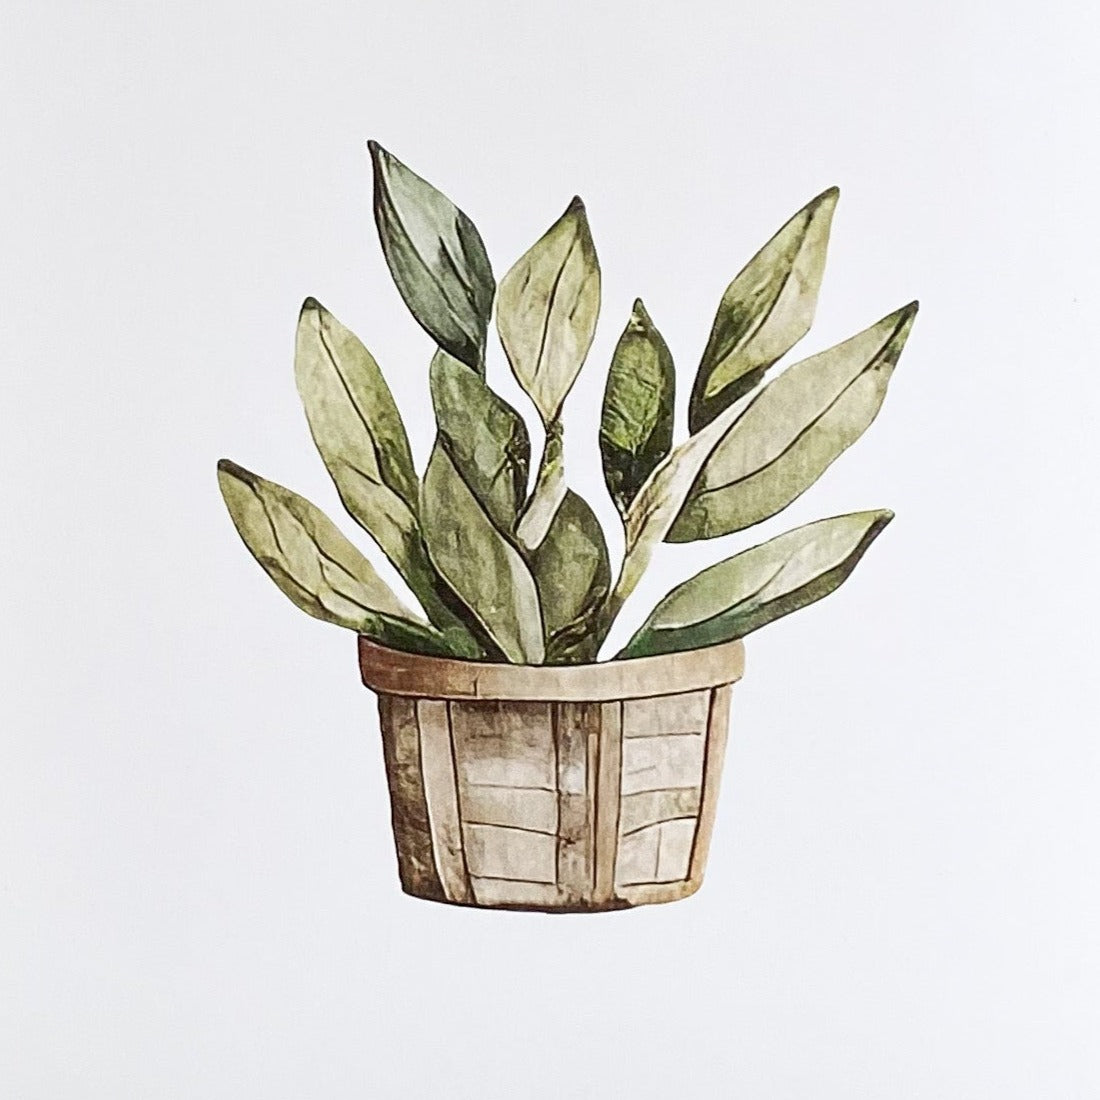 Potted Plant | 8x10” Single Art Print